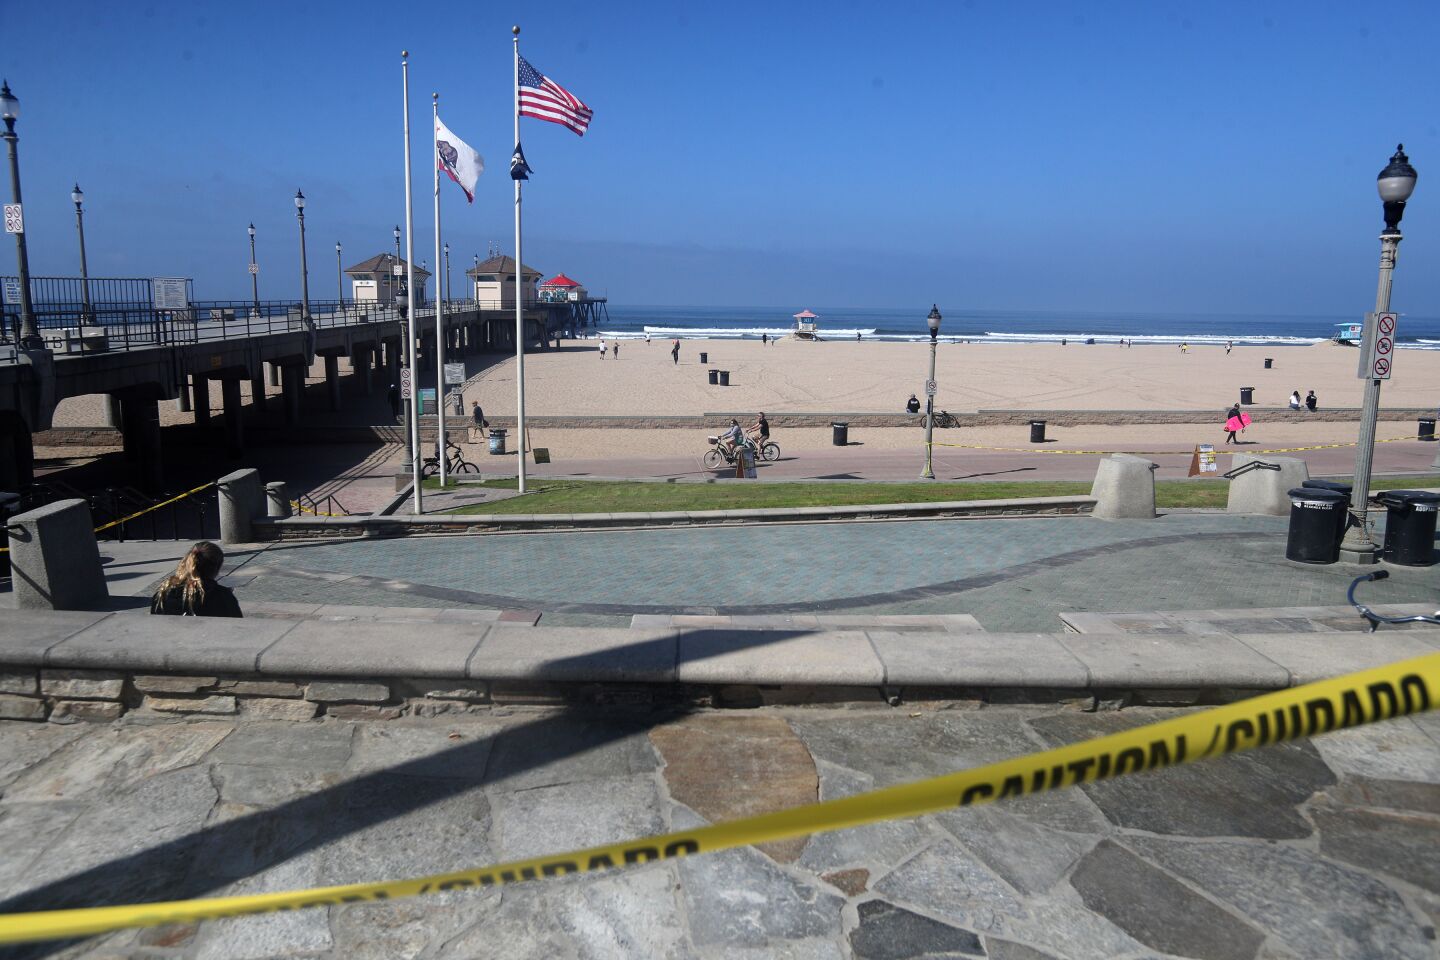 Few people were seen on the city beach in Huntington Beach on Saturday.